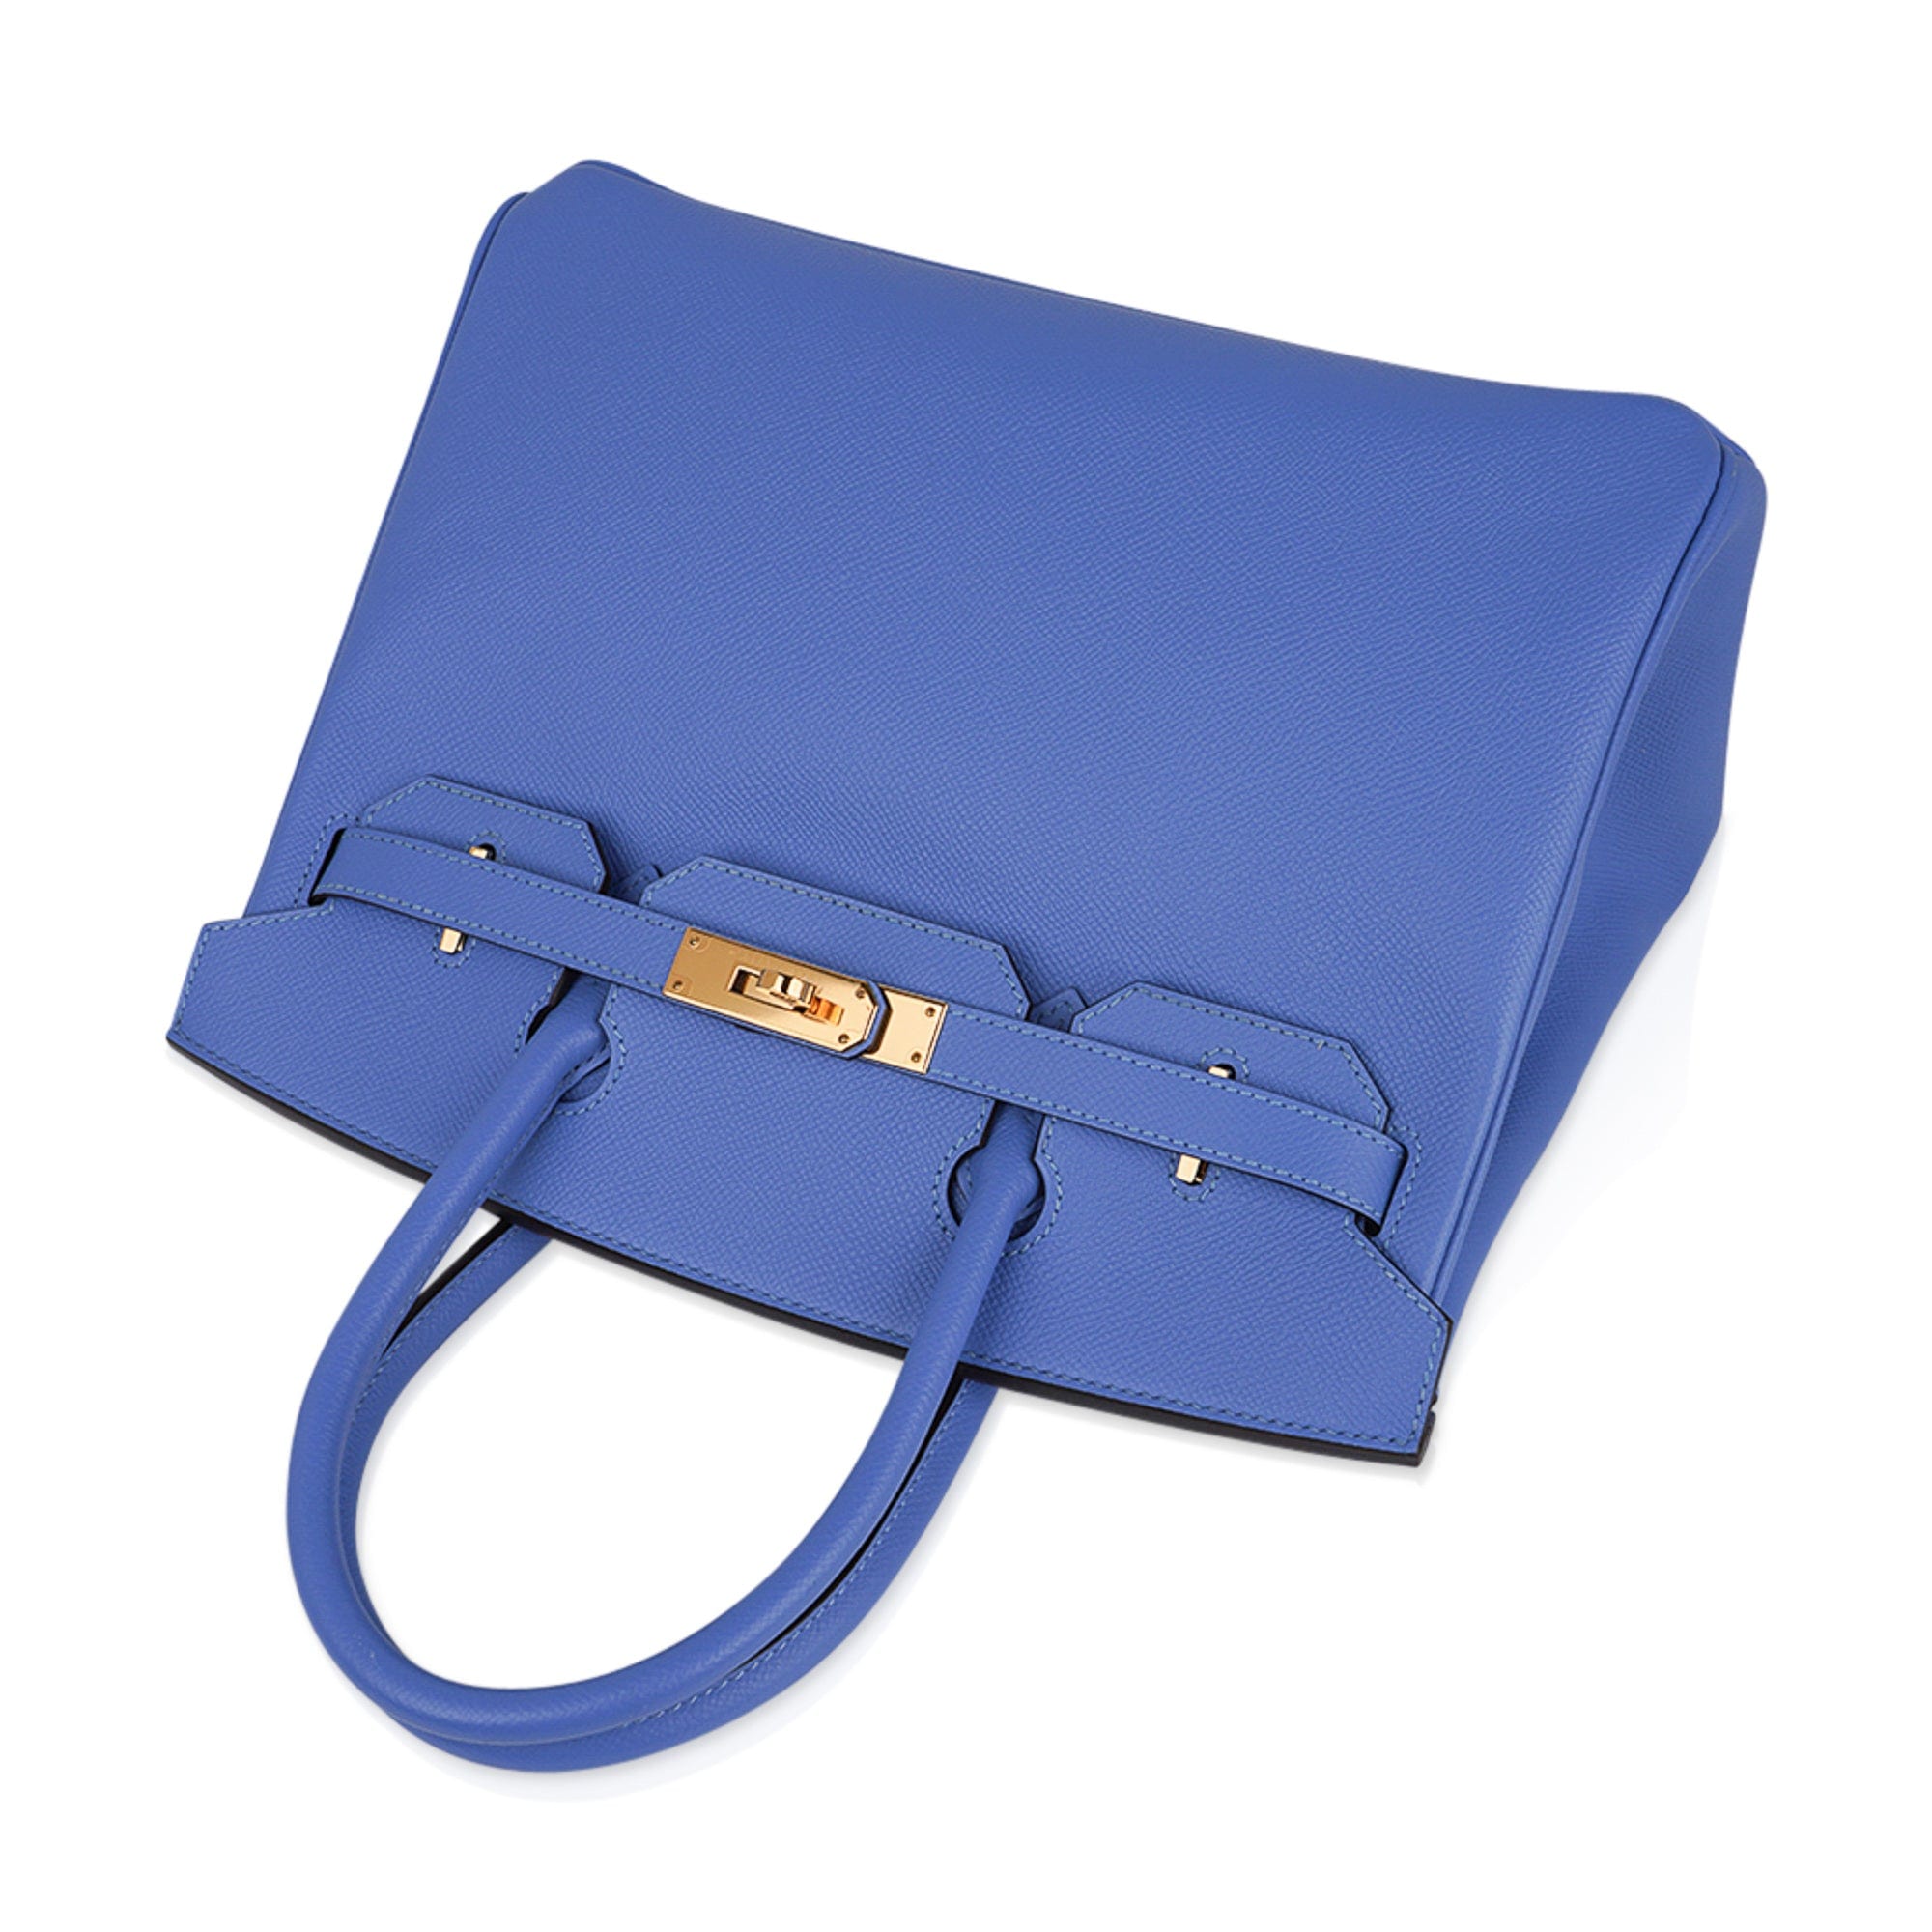 Hermès - Authenticated Birkin 30 Handbag - Leather Blue for Women, Very Good Condition